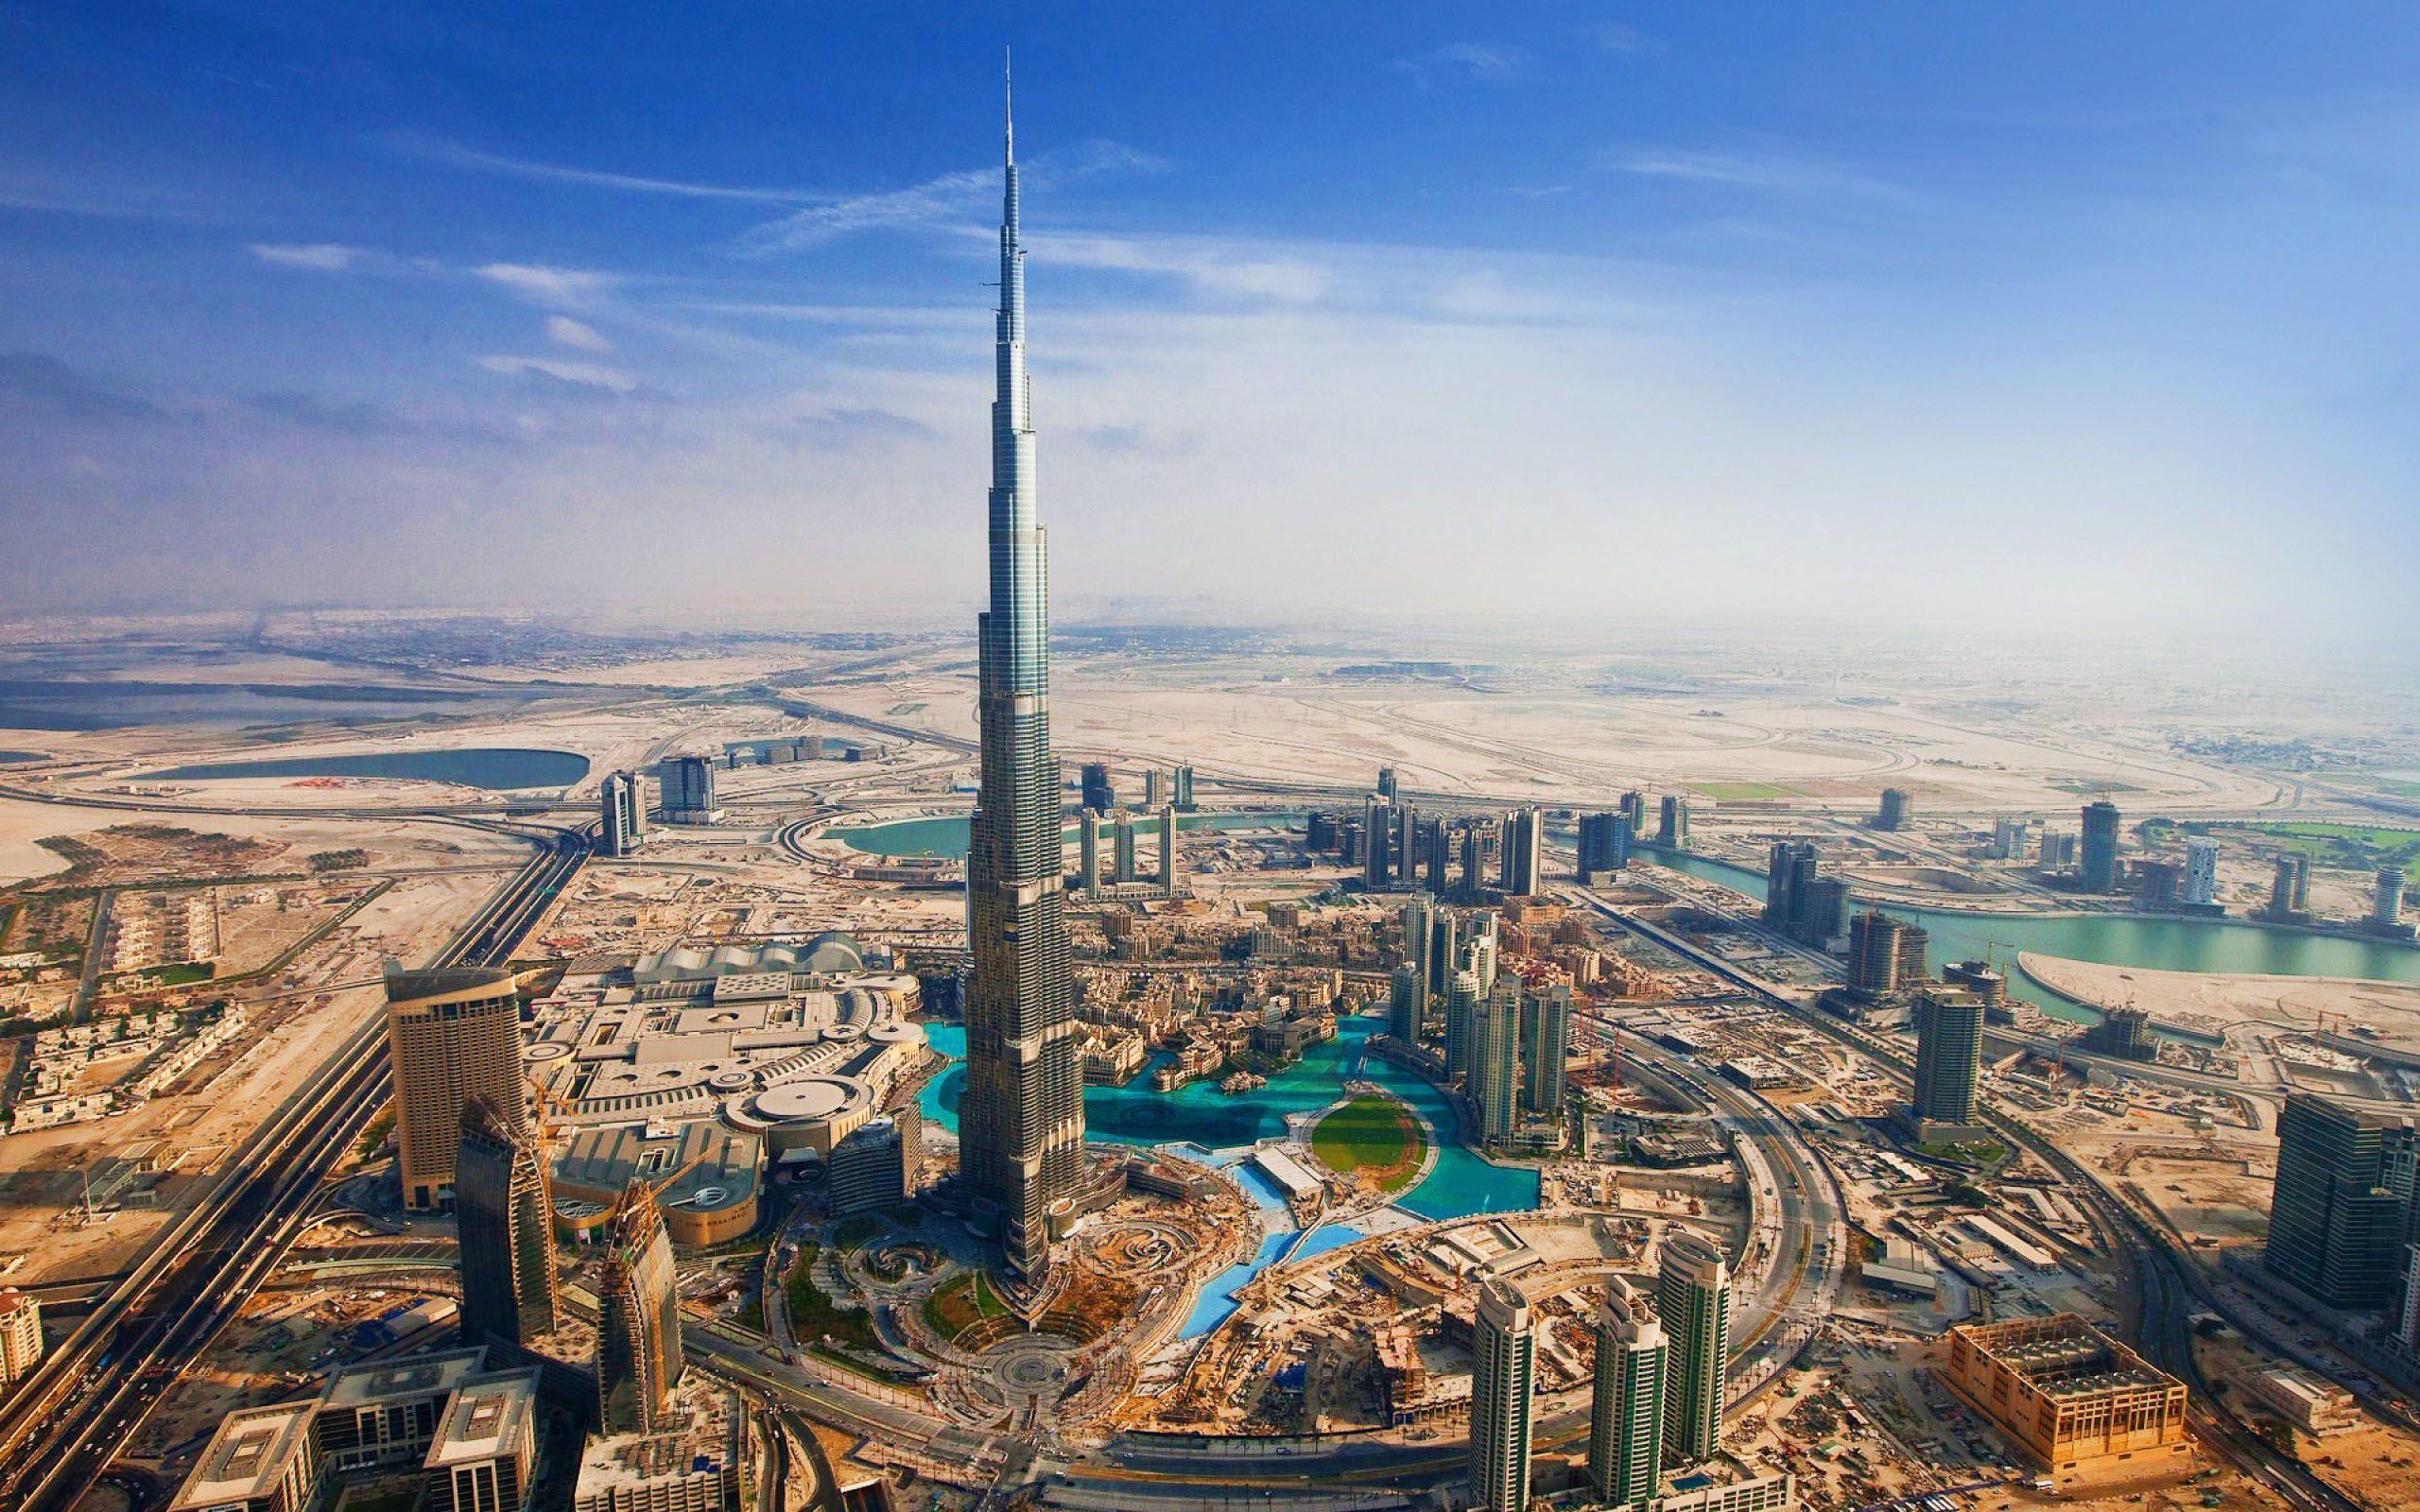 Design Your Landscape With Dubai’s Climate in Mind